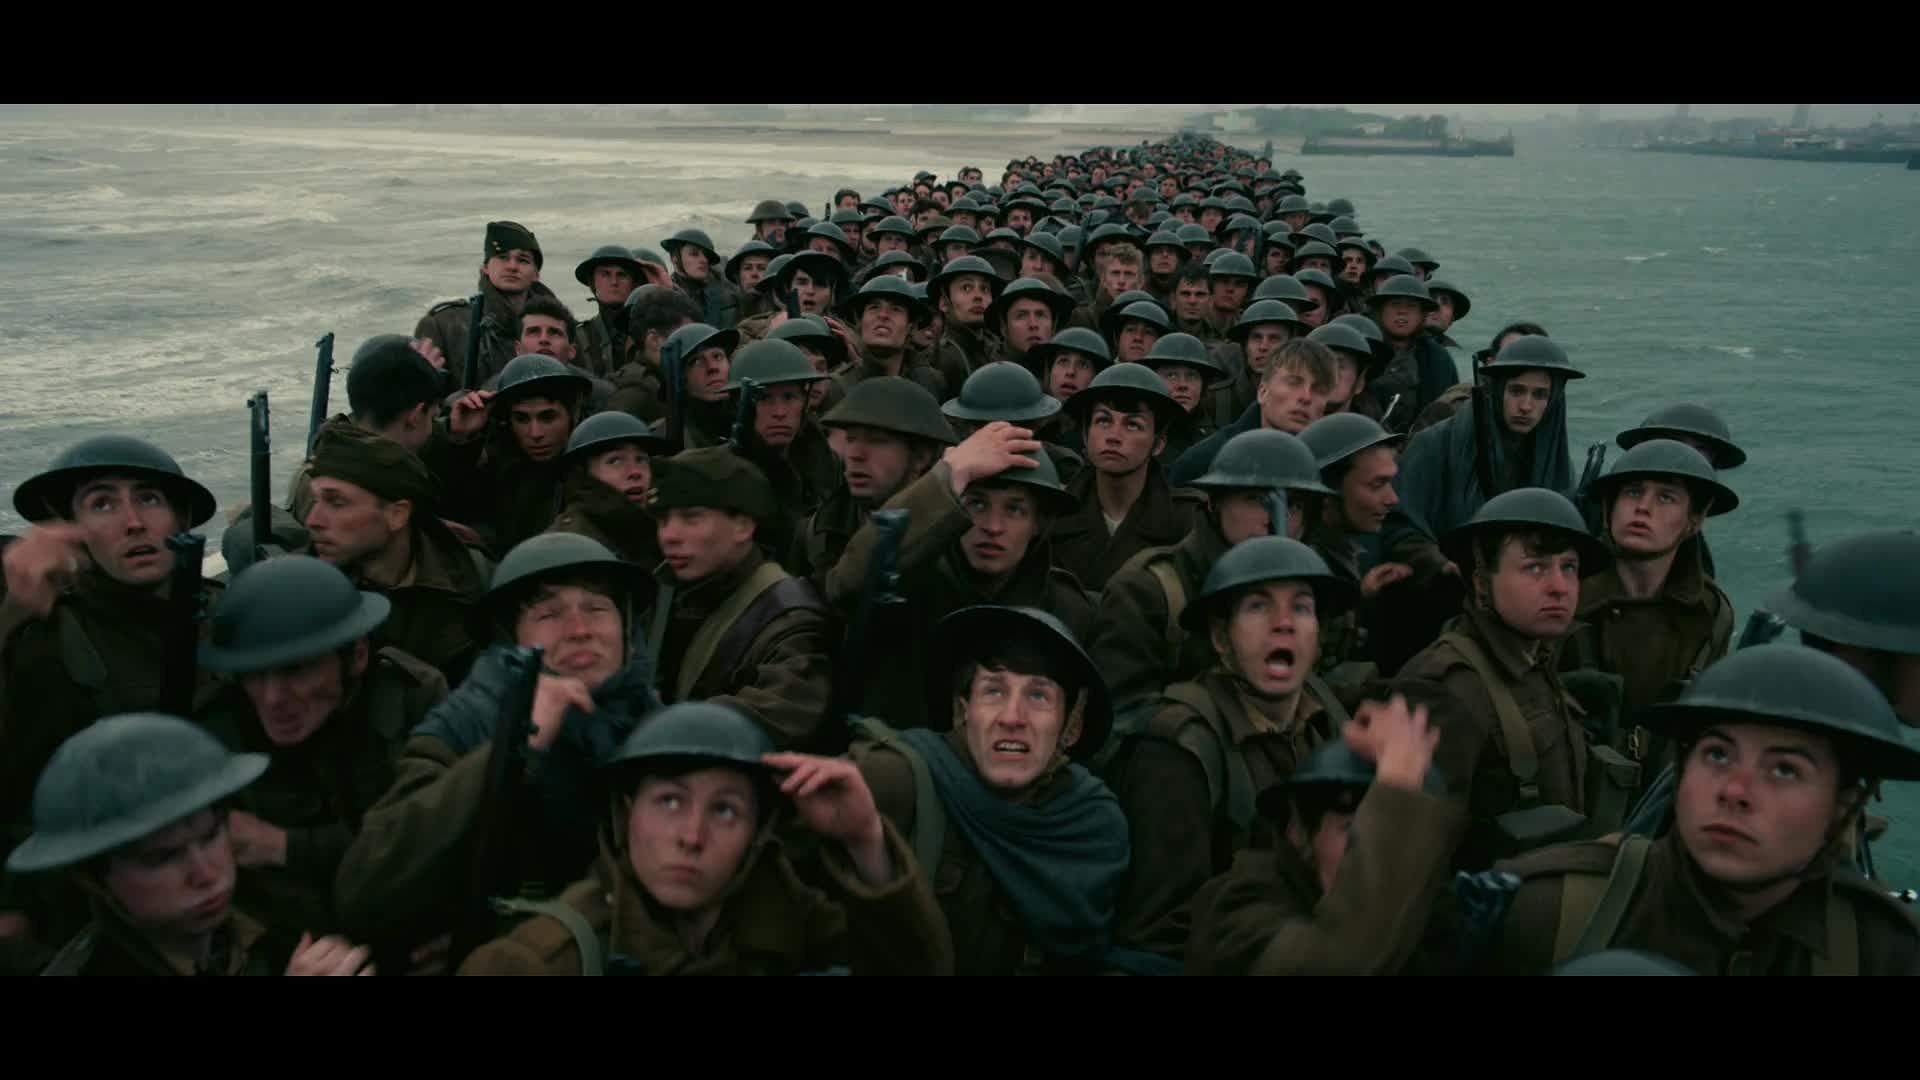 A Scene from Dunkirk (Image via IMdb.com)